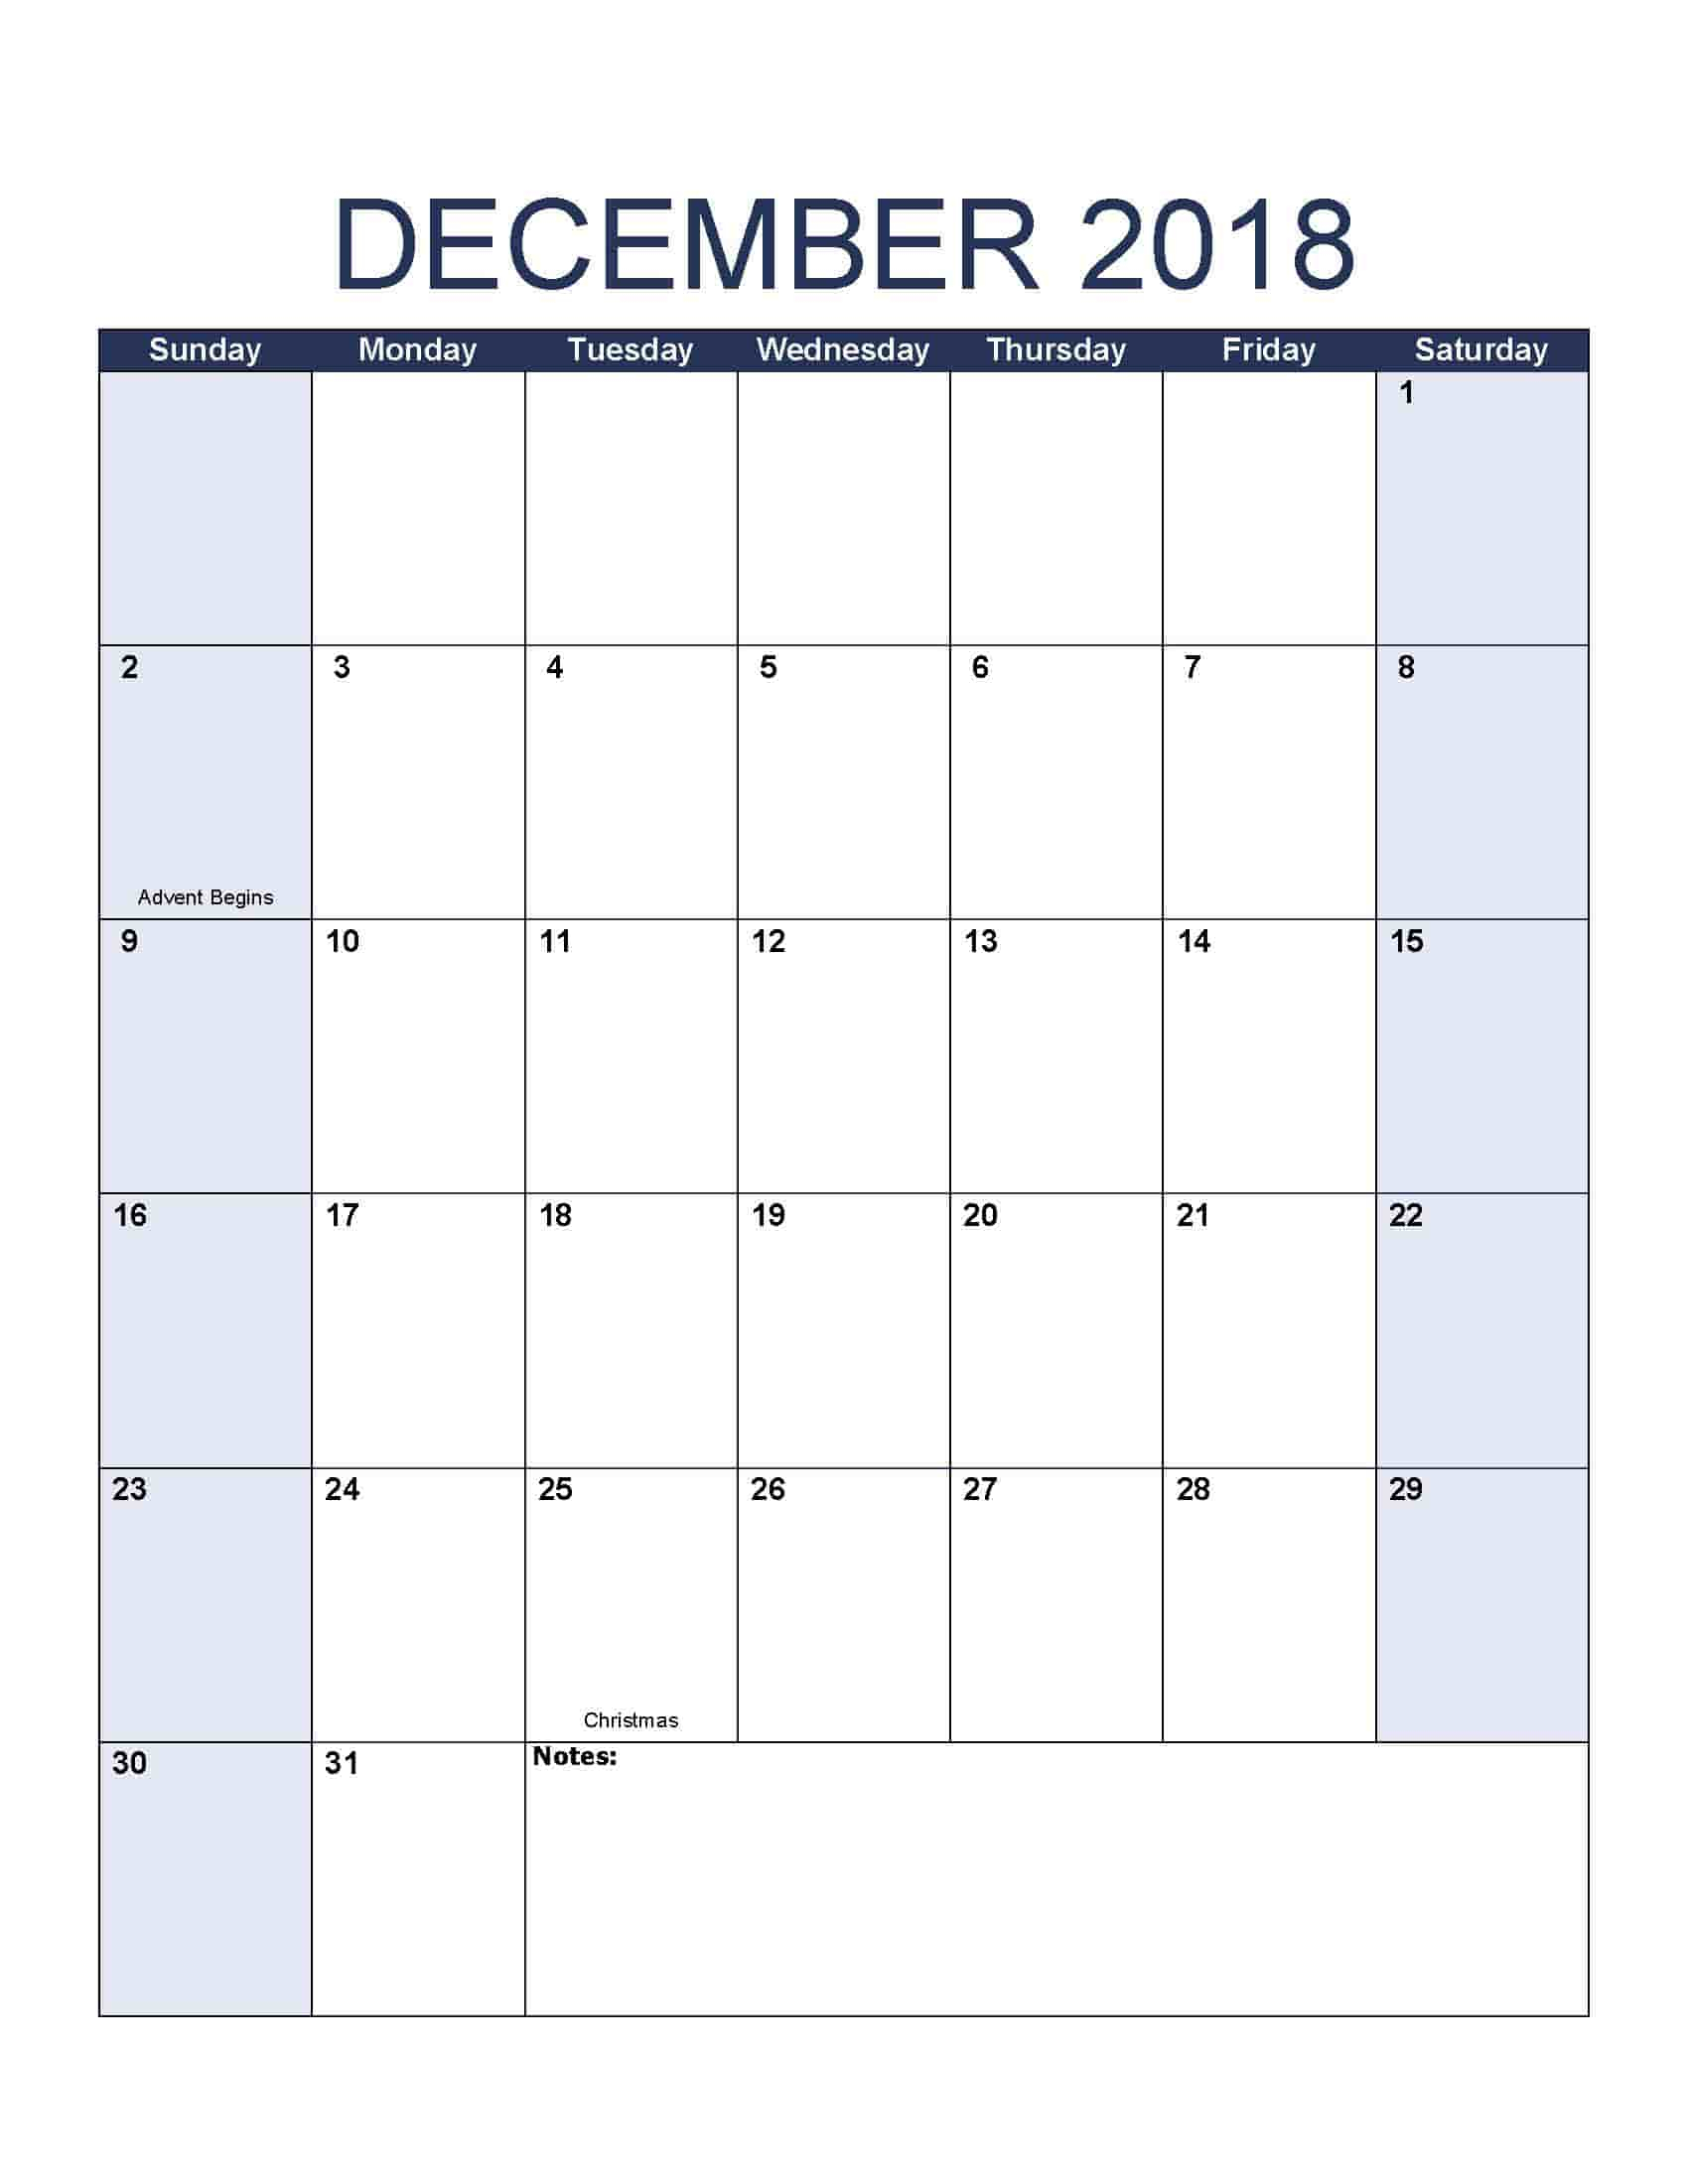 December 2018 Calendar - Free, Printable Calendar Templates